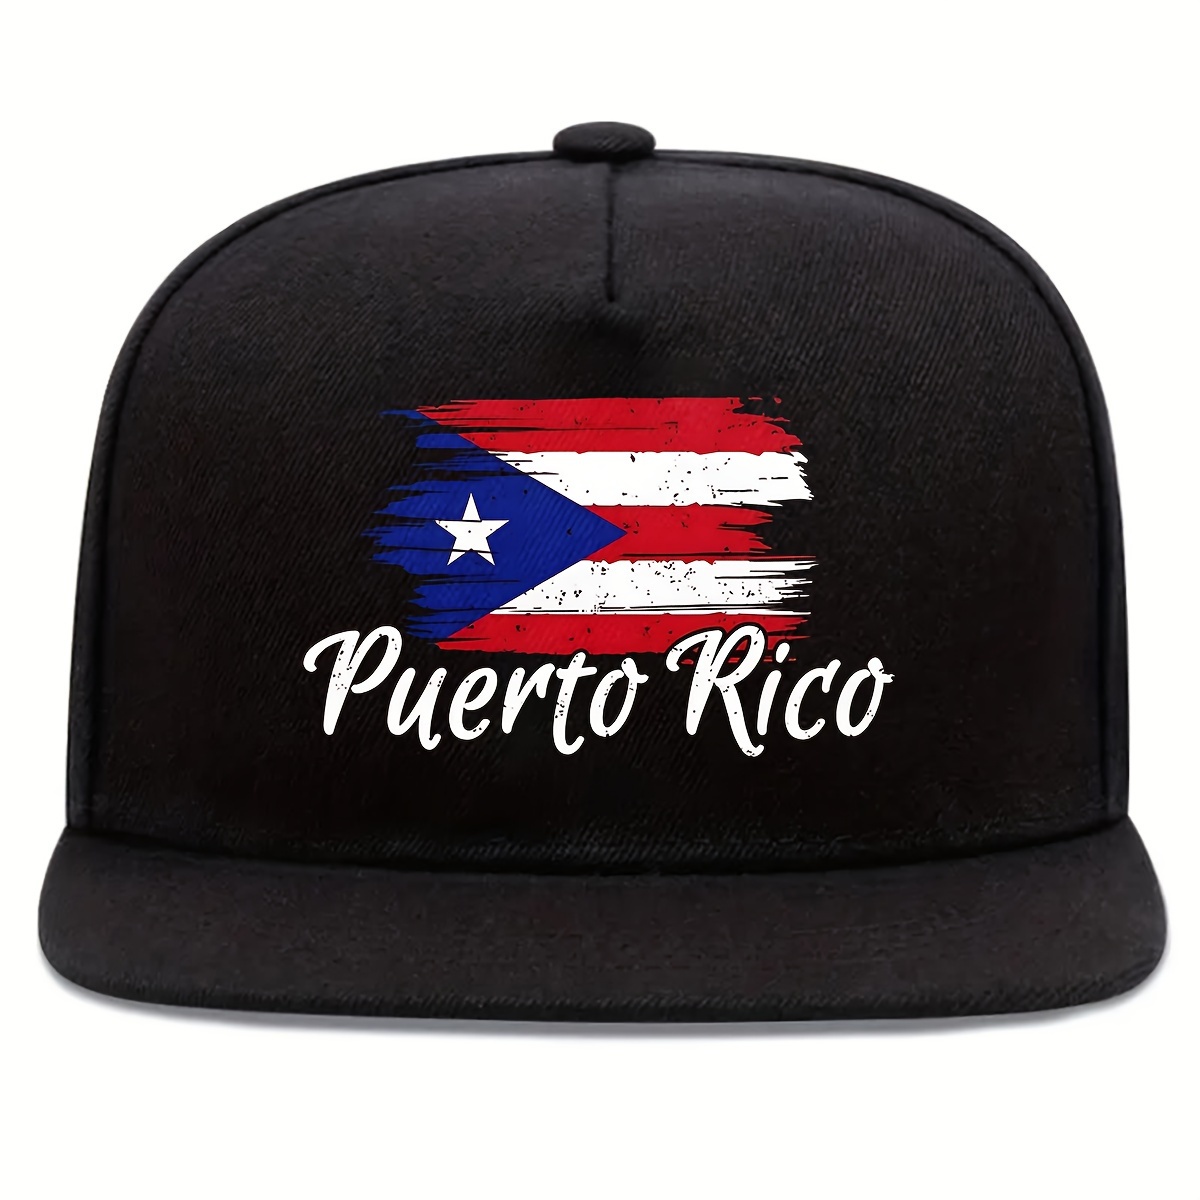 

1pc Adjustable Puerto Rico Flag Fashion Baseball Cap, Unisex Hip-hop Street Style Snapback Hat, Cute Uv Protection Cotton Duckbill Hat